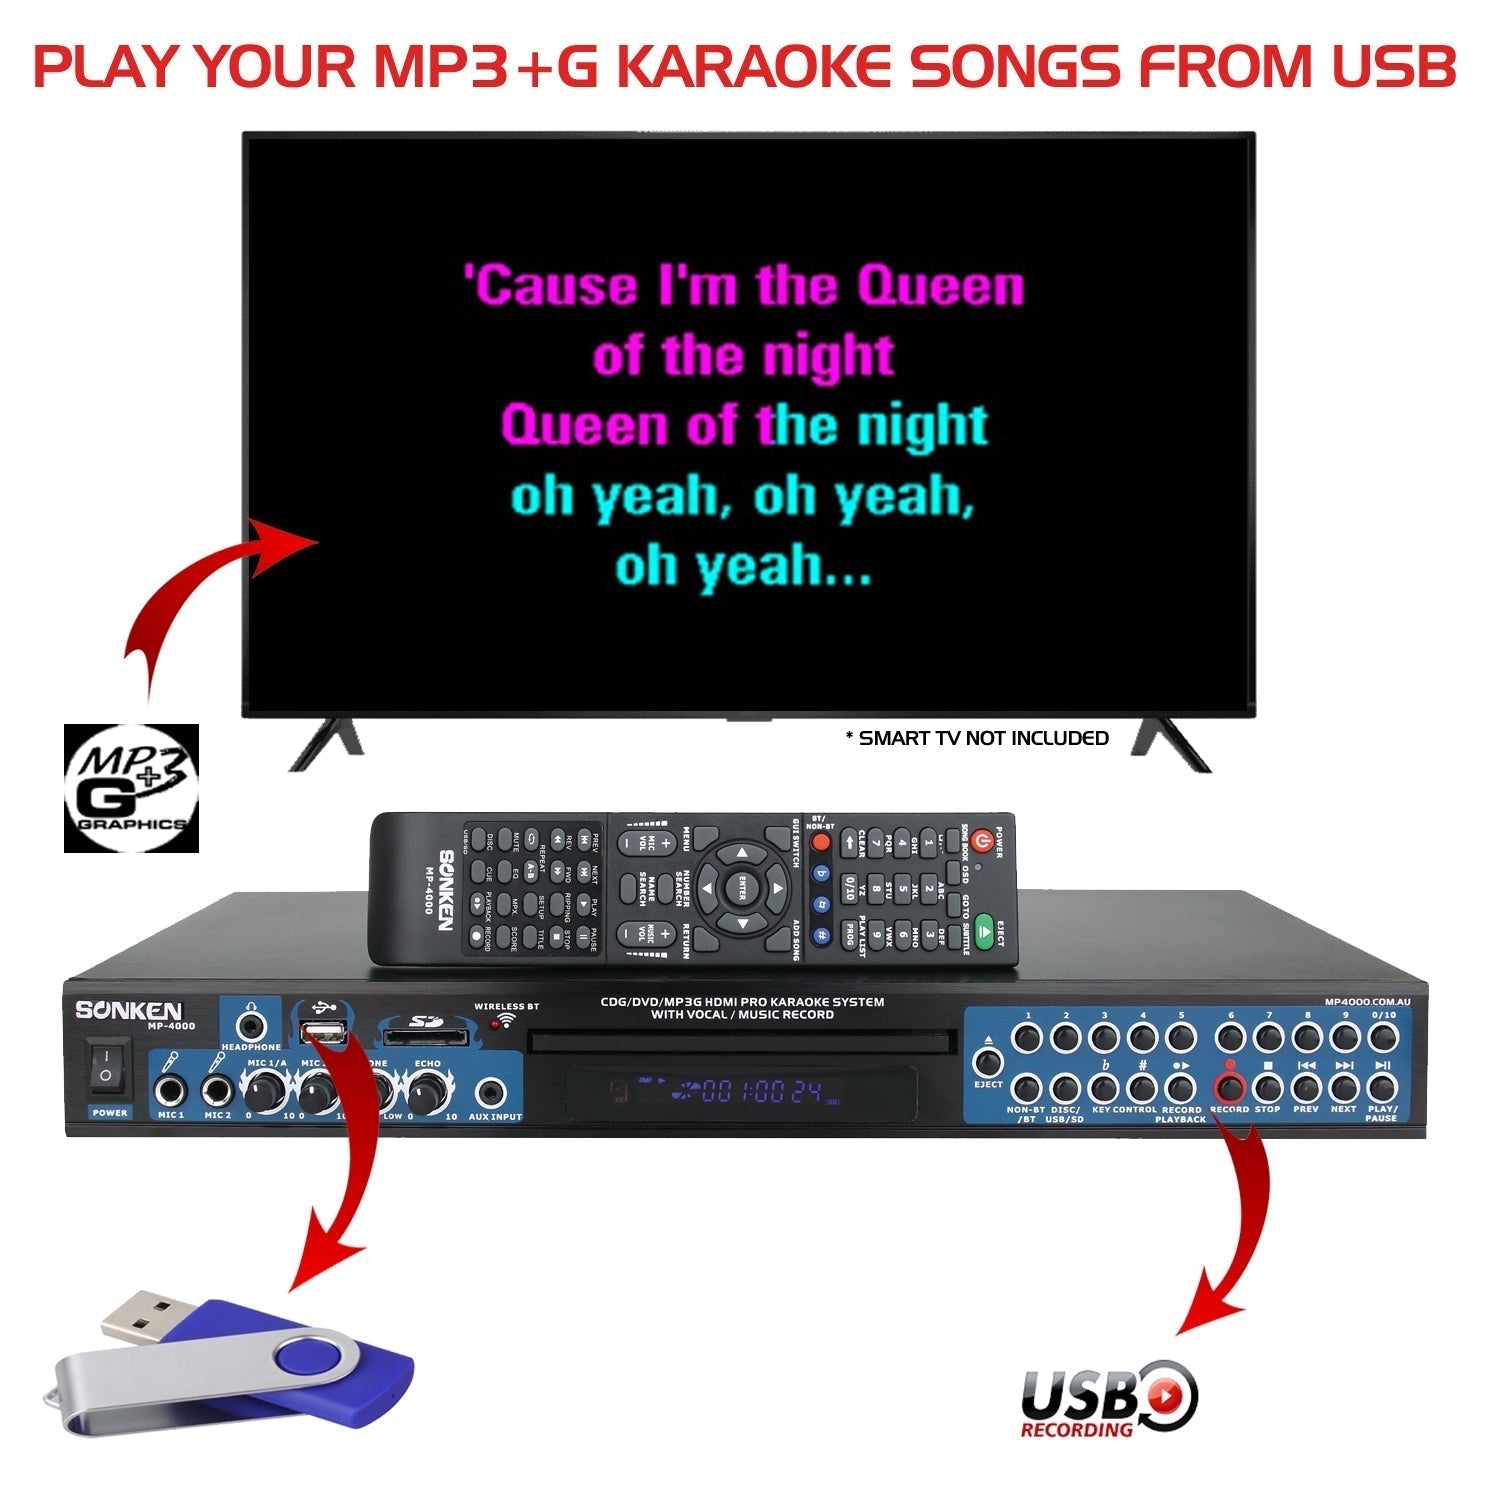 Sonken MP4000 Pro Karaoke Machine + 420 Songs from the 80's & 90's + 2 Wired Microphones - Karaoke Home Entertainment